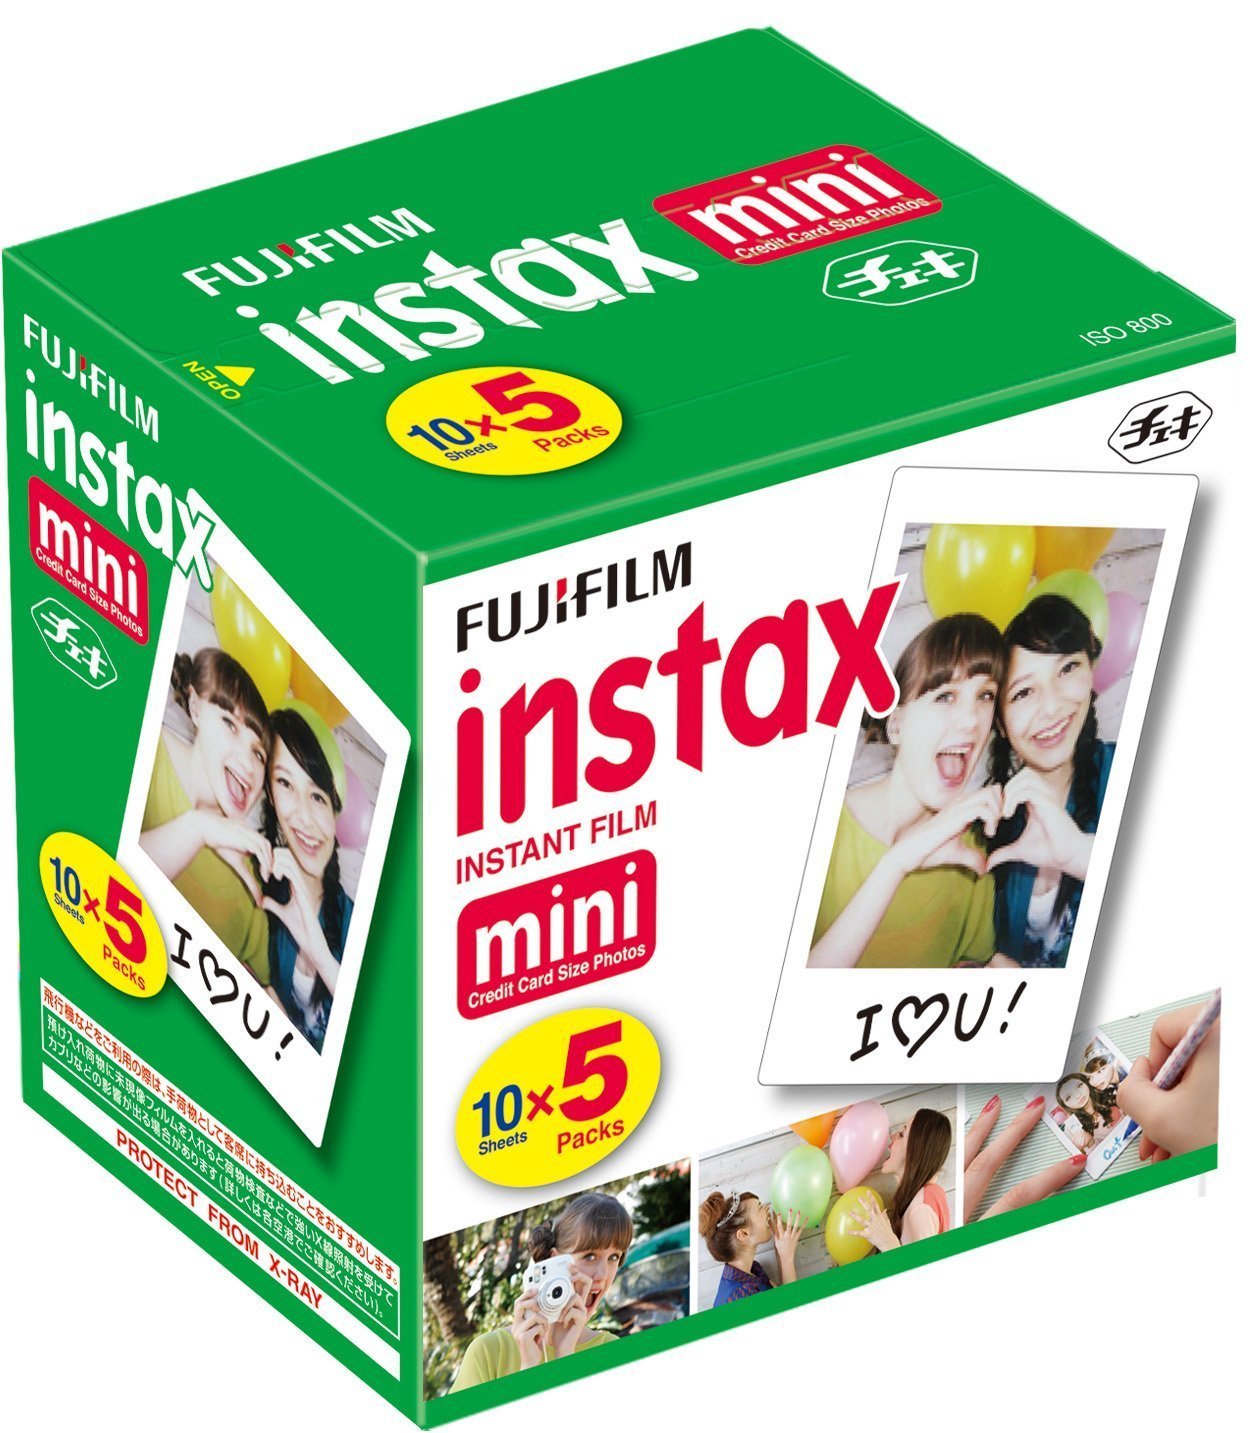 Fujifilm Instax Mini Instant Film, 50 Sheets - image 1 of 2